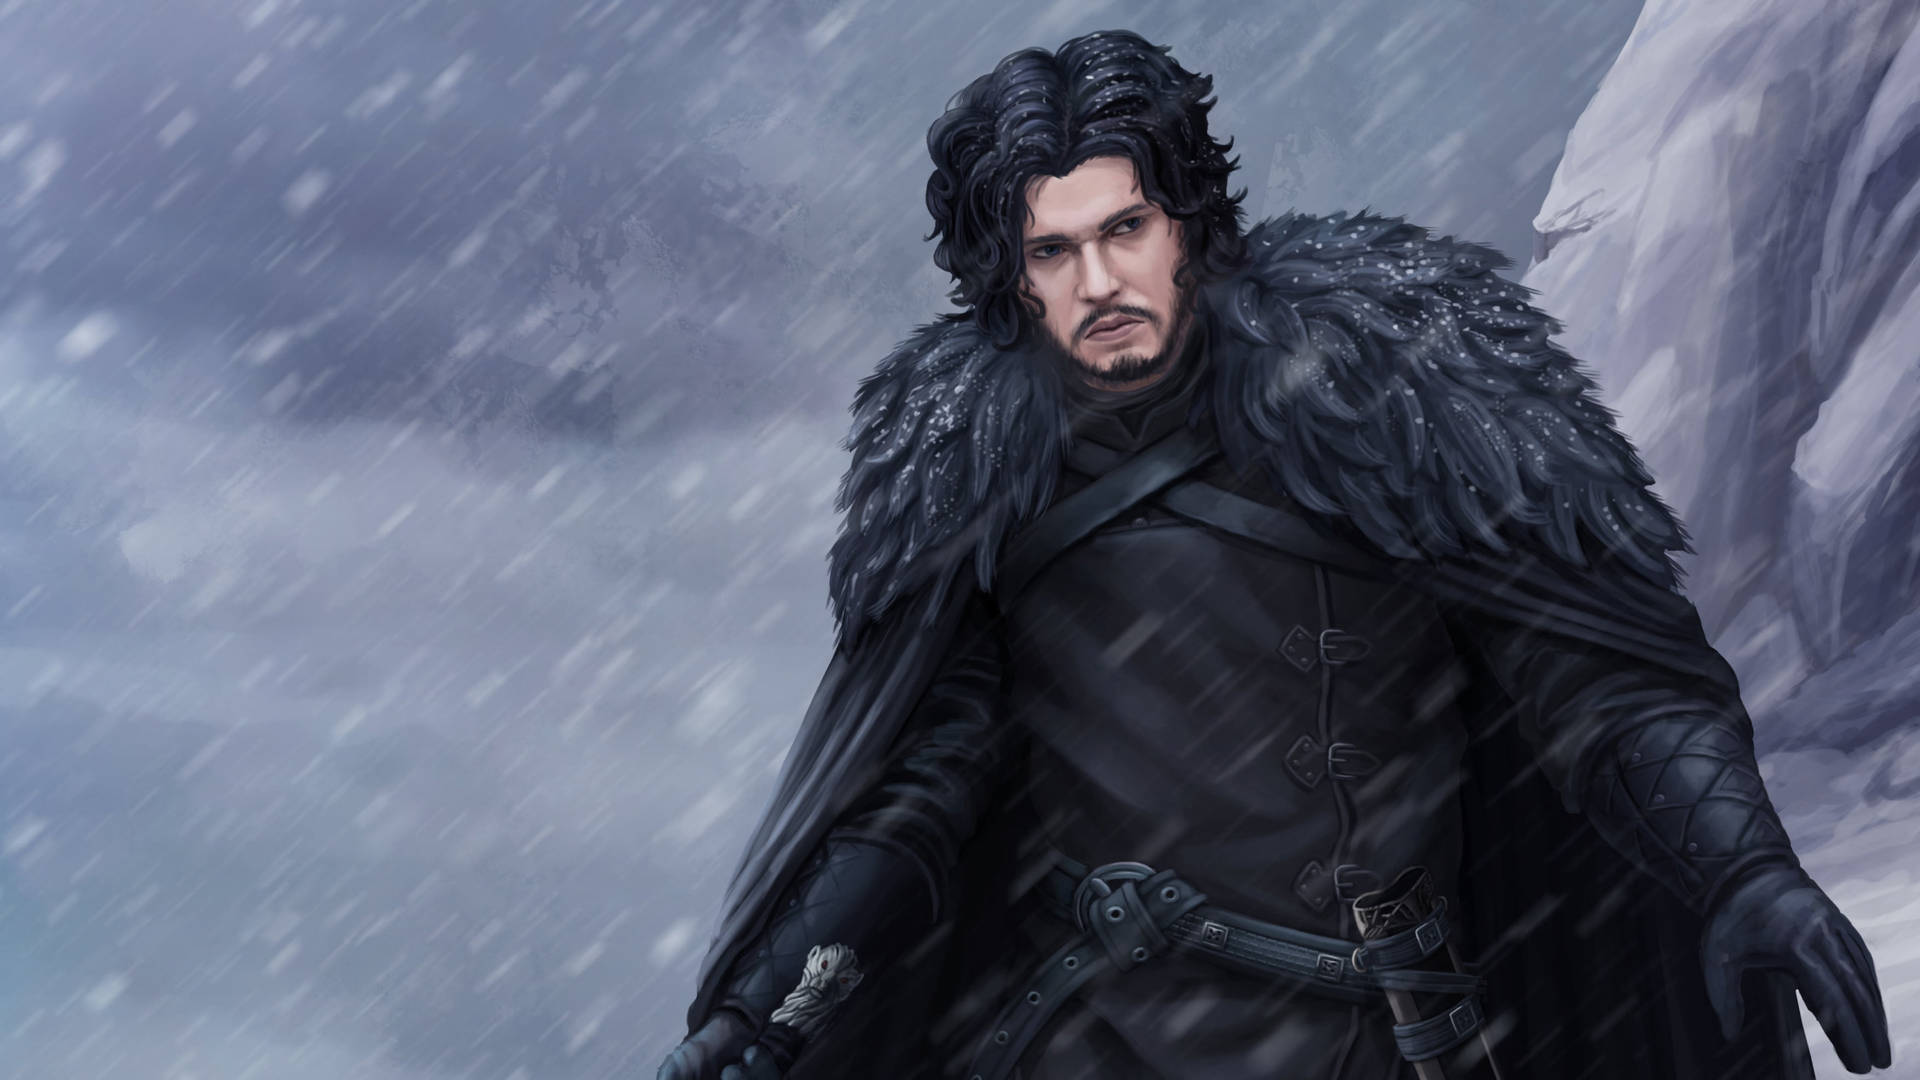 Free Jon Snow Game Of Thrones Wallpaper Downloads, [100+] Jon Snow Game Of  Thrones Wallpapers for FREE 